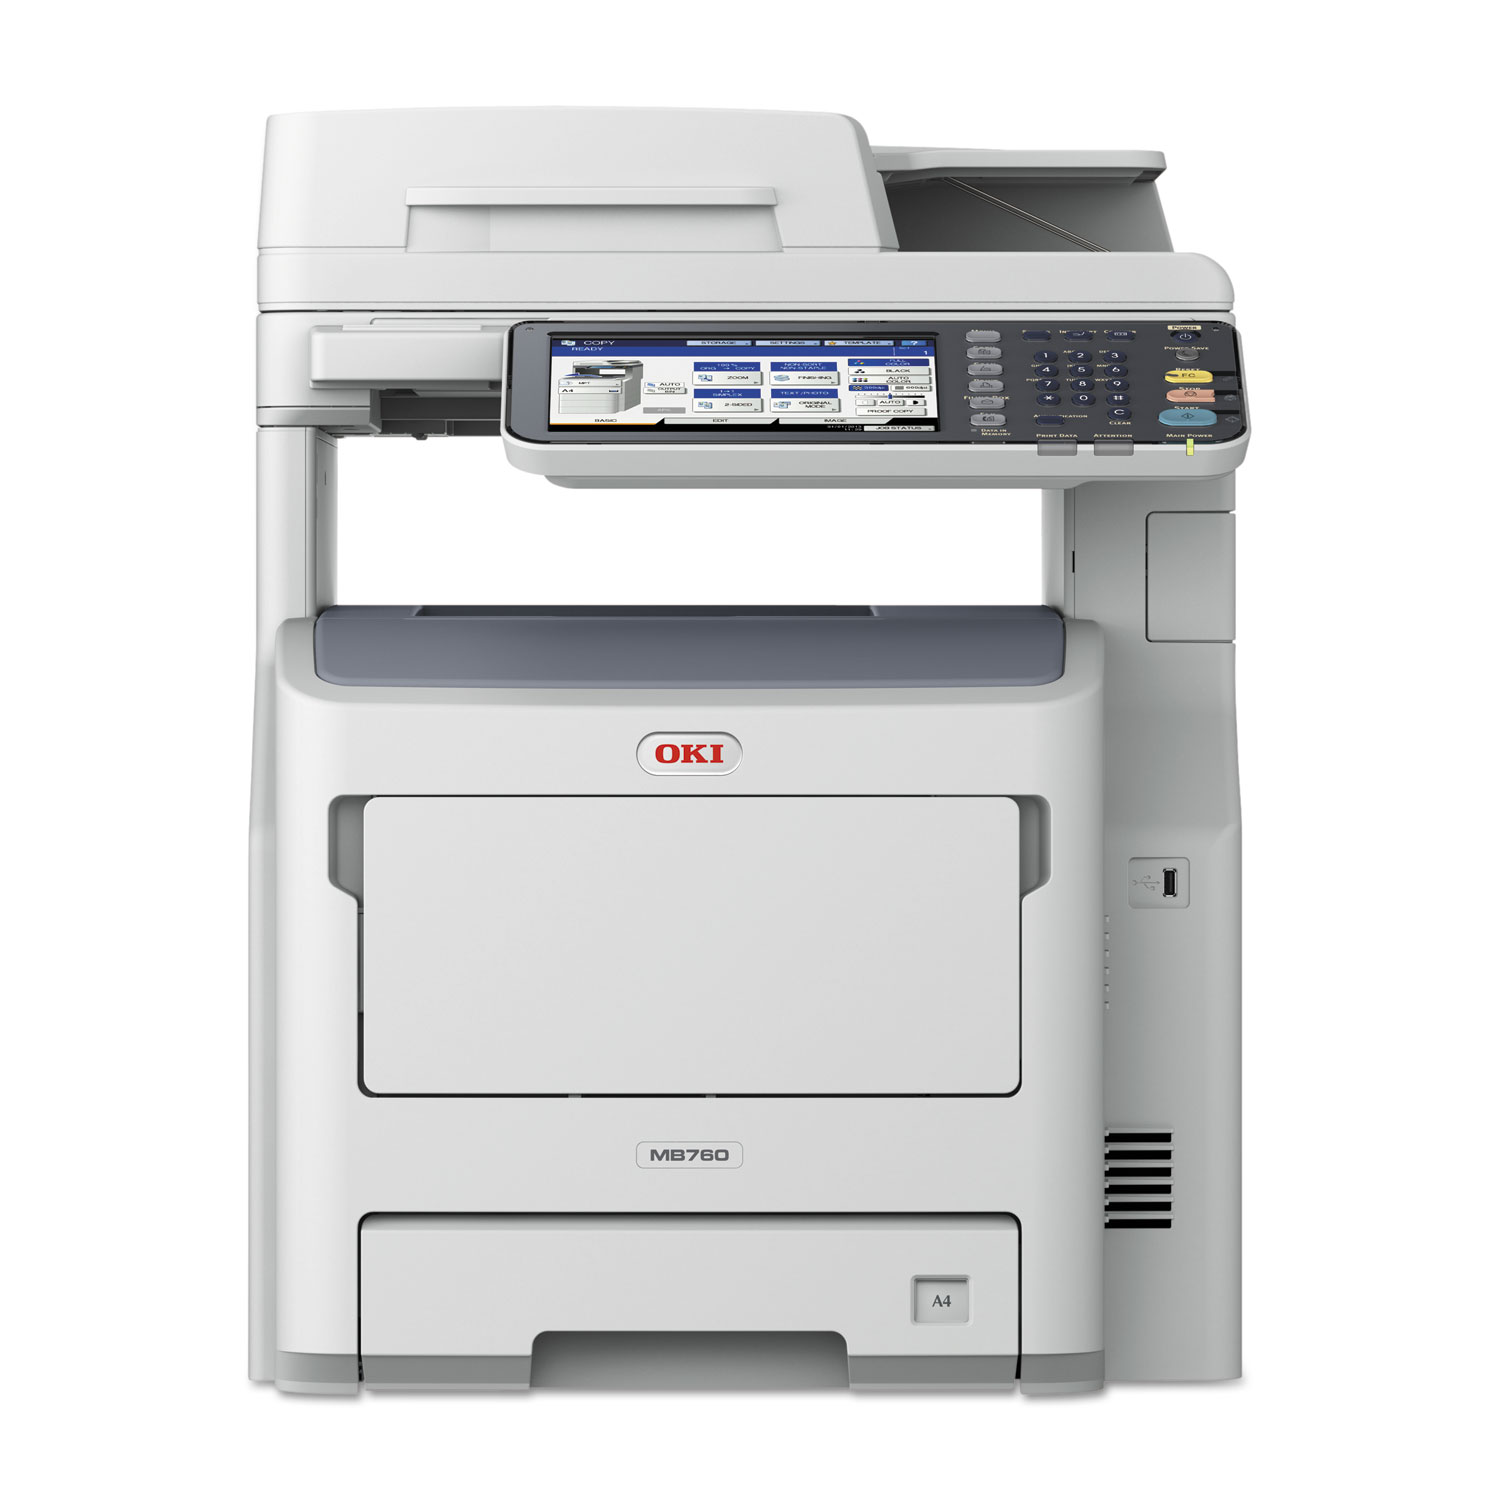 MB770 Multifunction Monochrome Laser Printer, Copy/Fax/Print/Scan